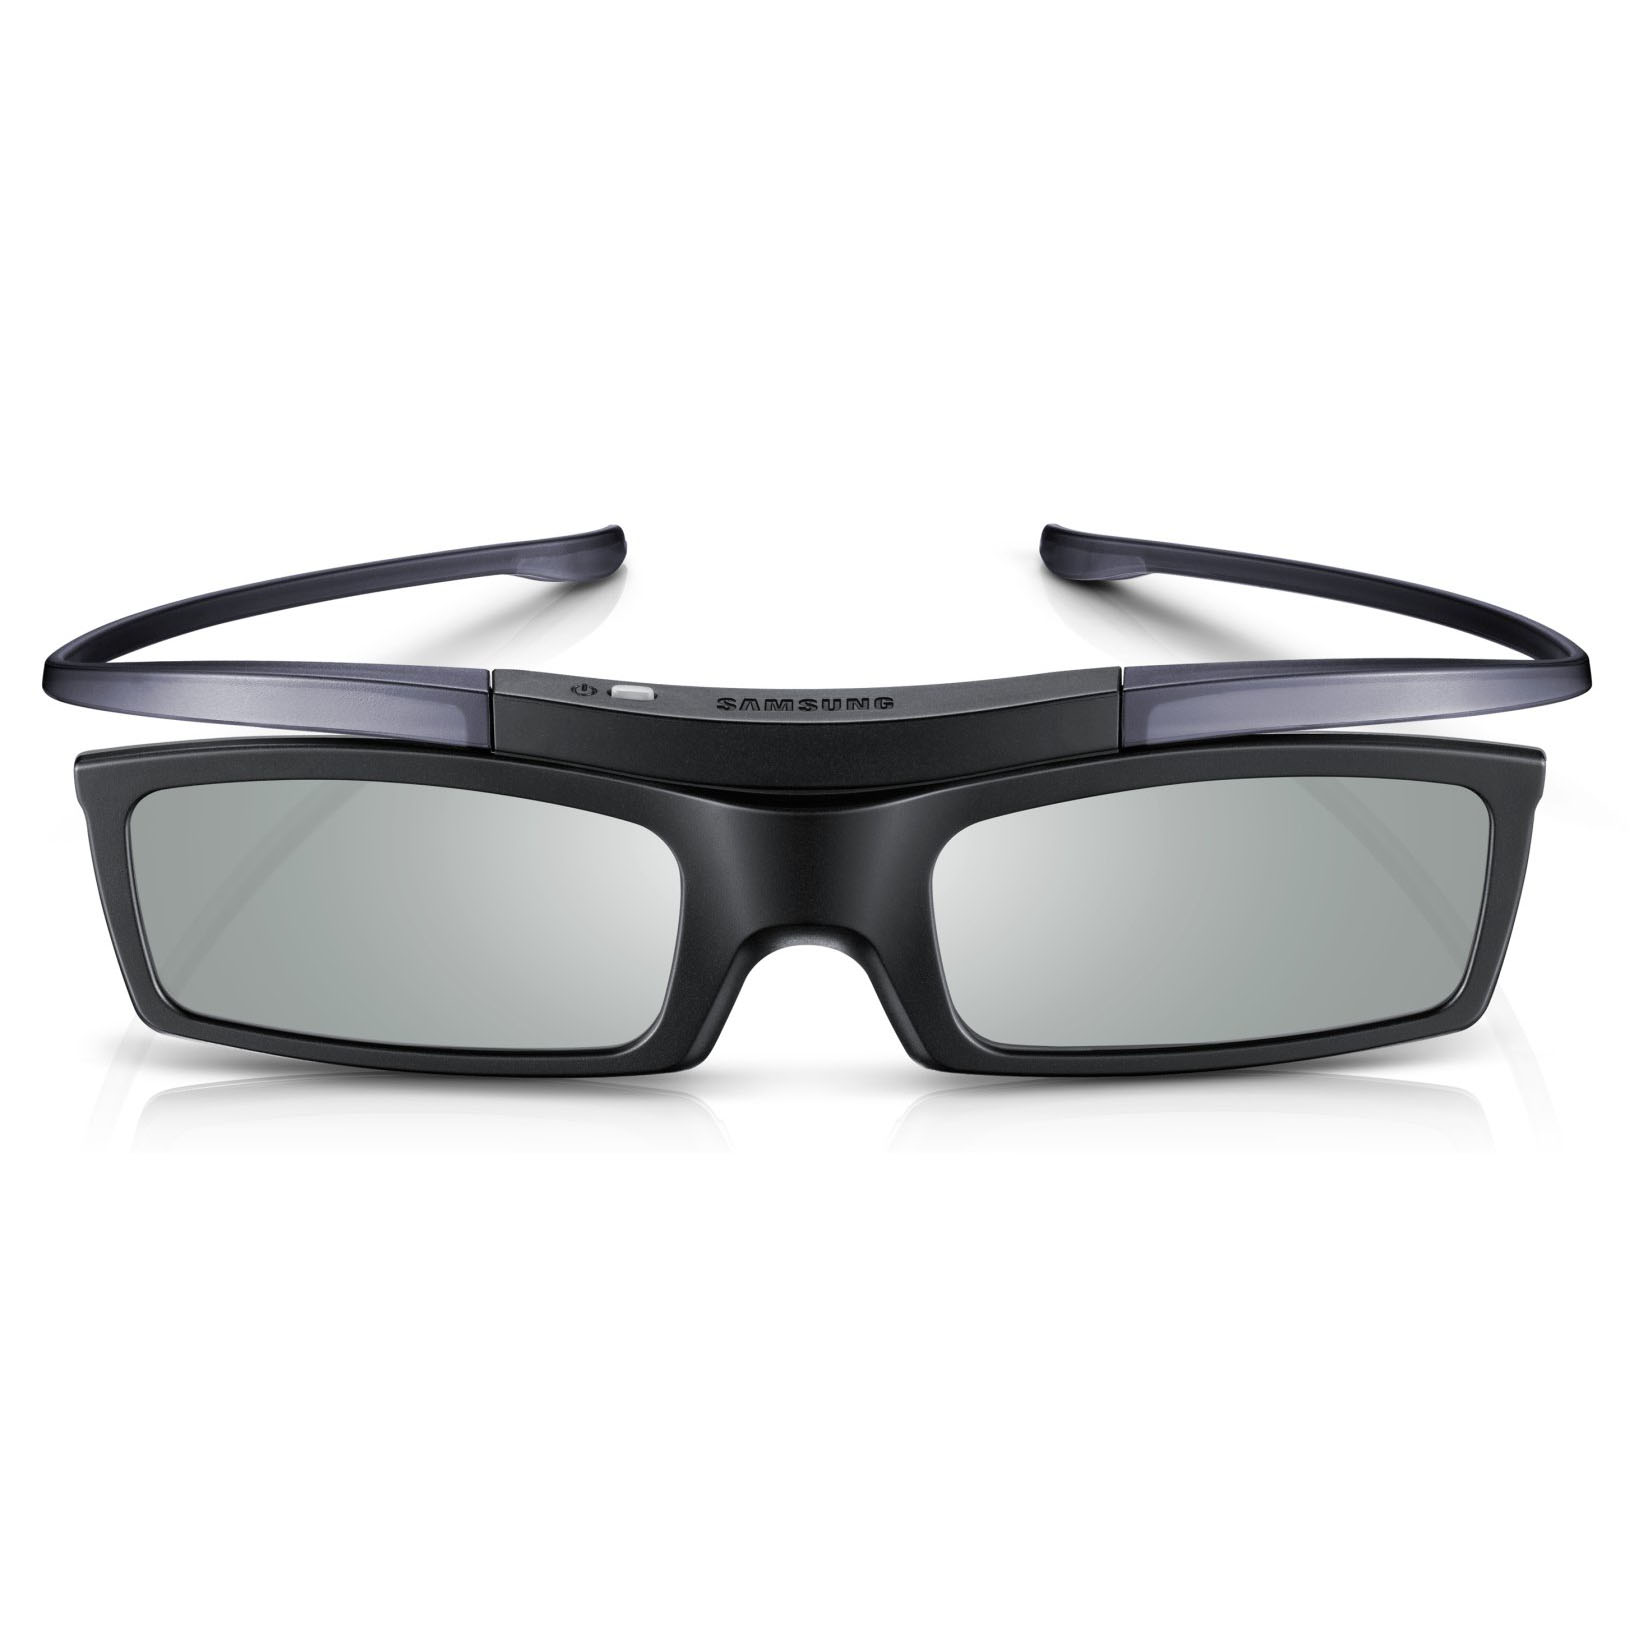 3D Glasses - Cinefacility